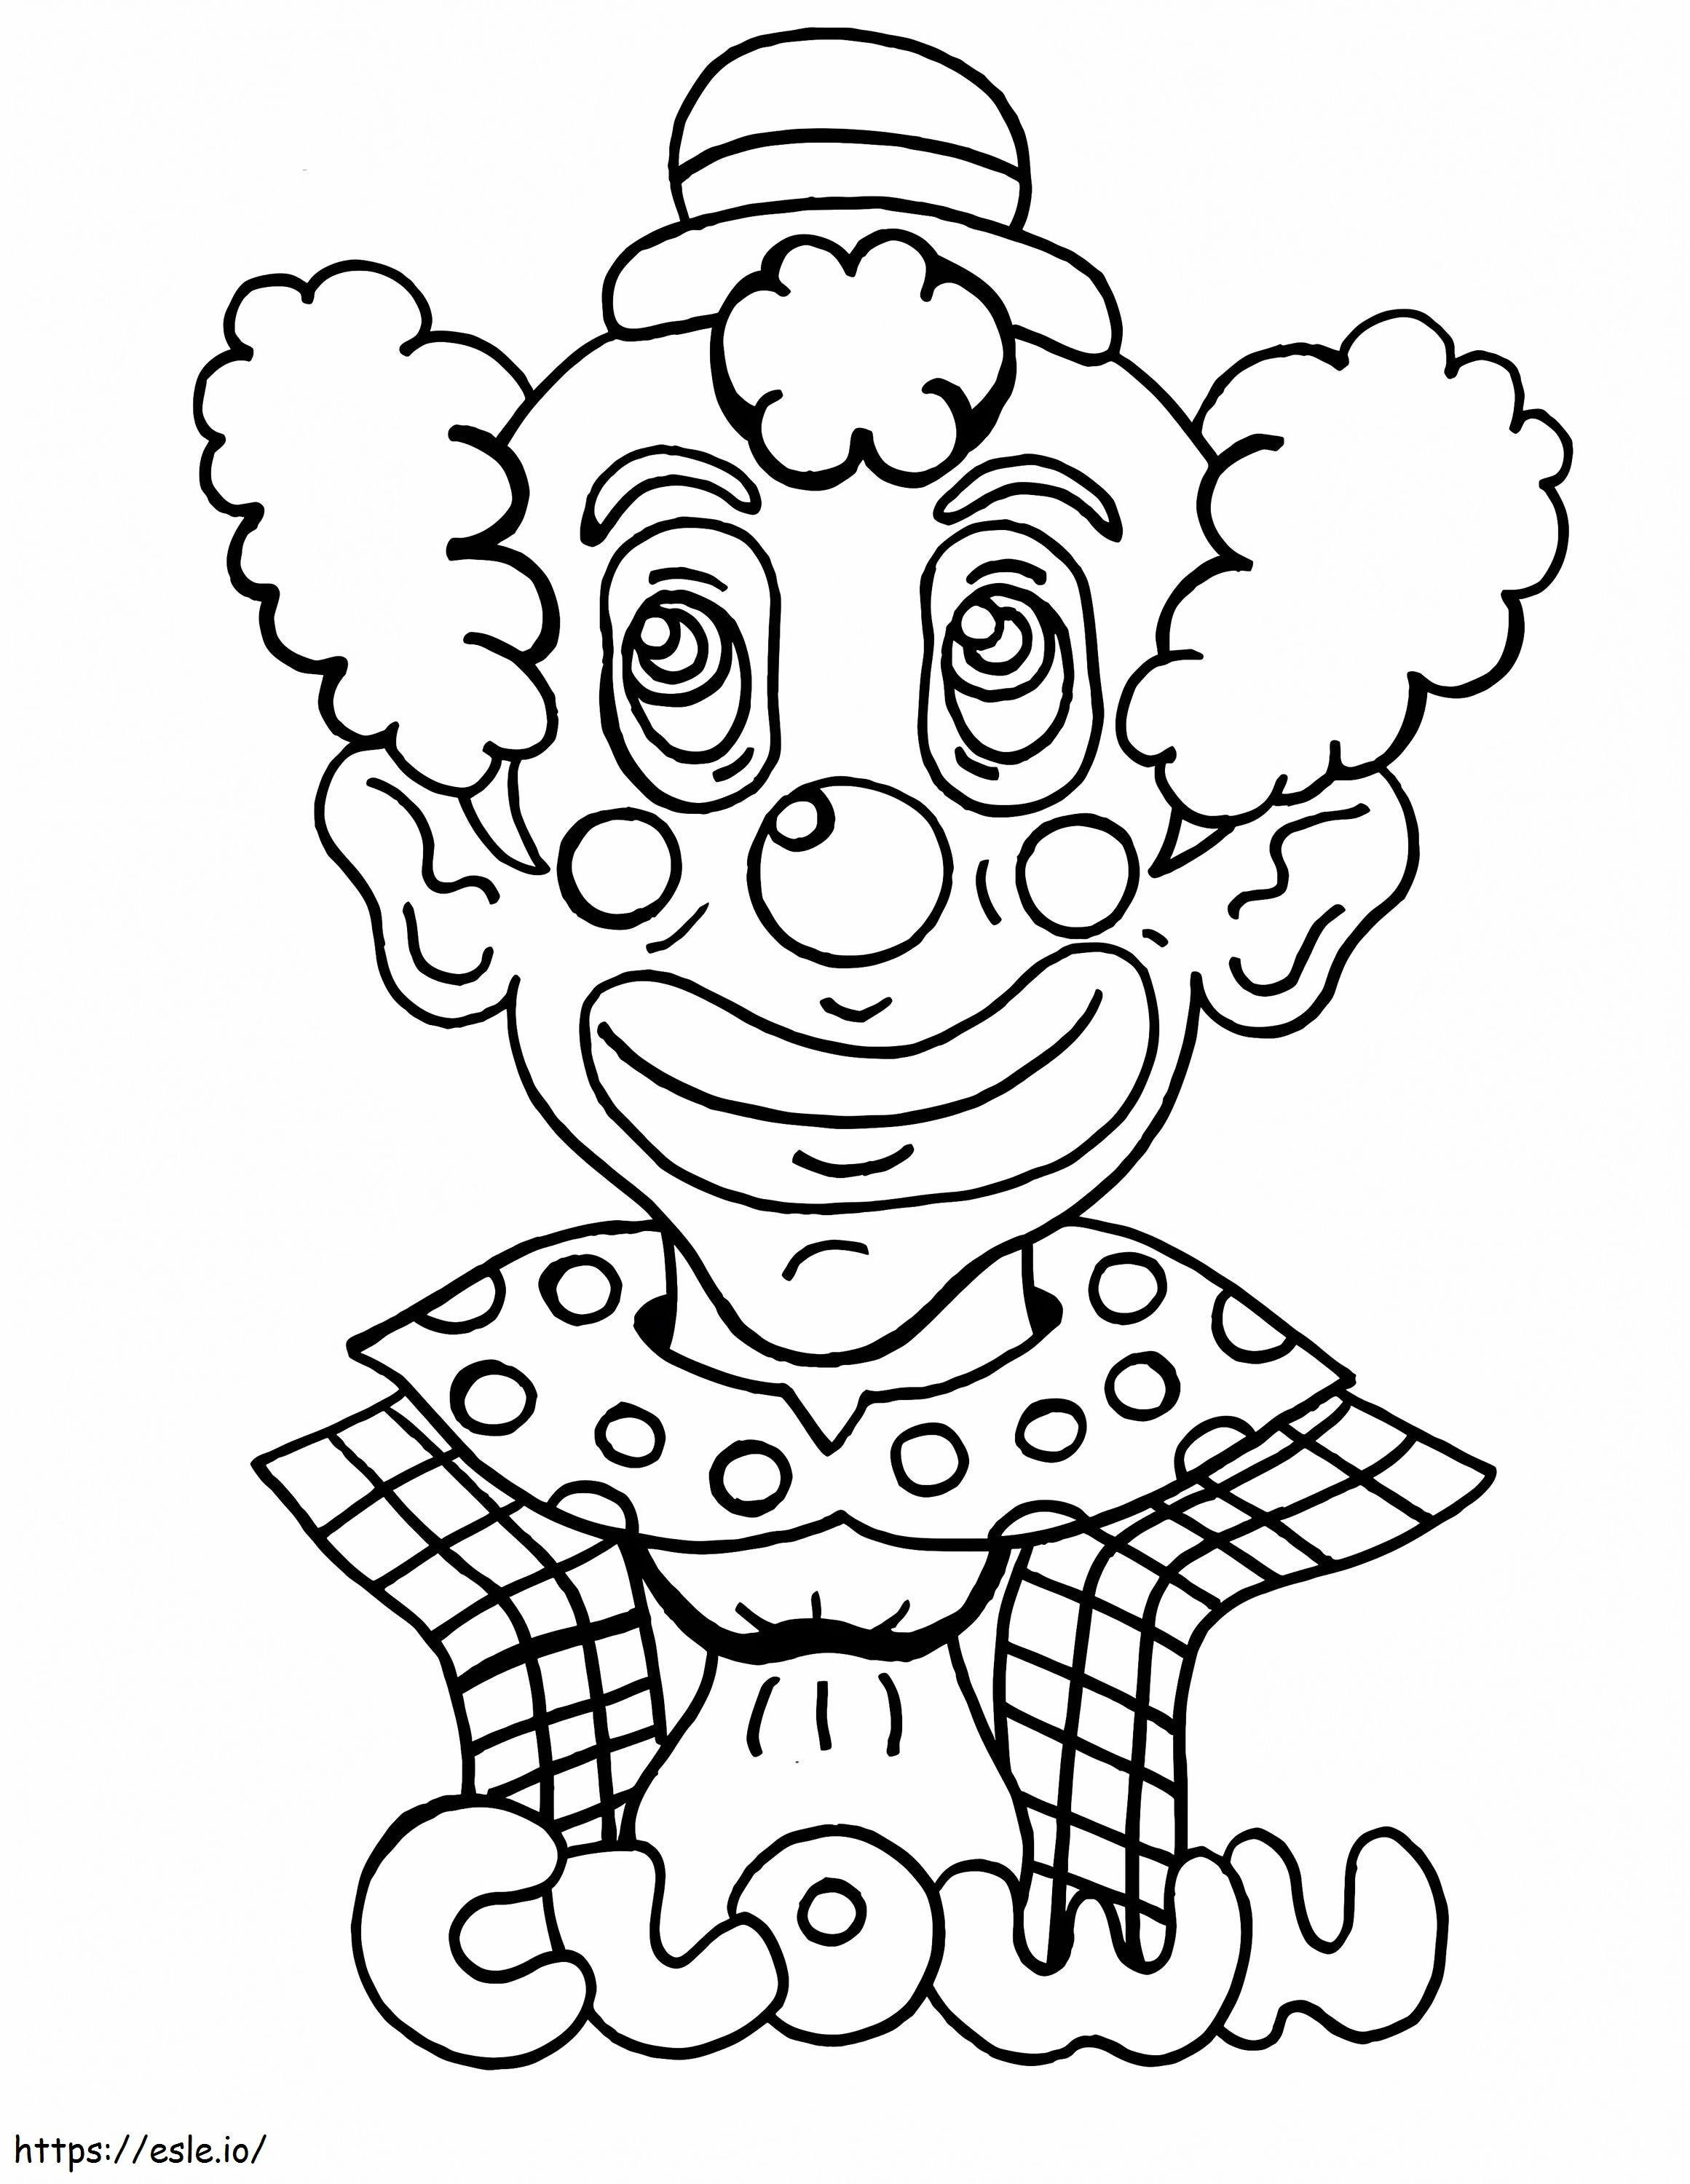 Sad Clown coloring page